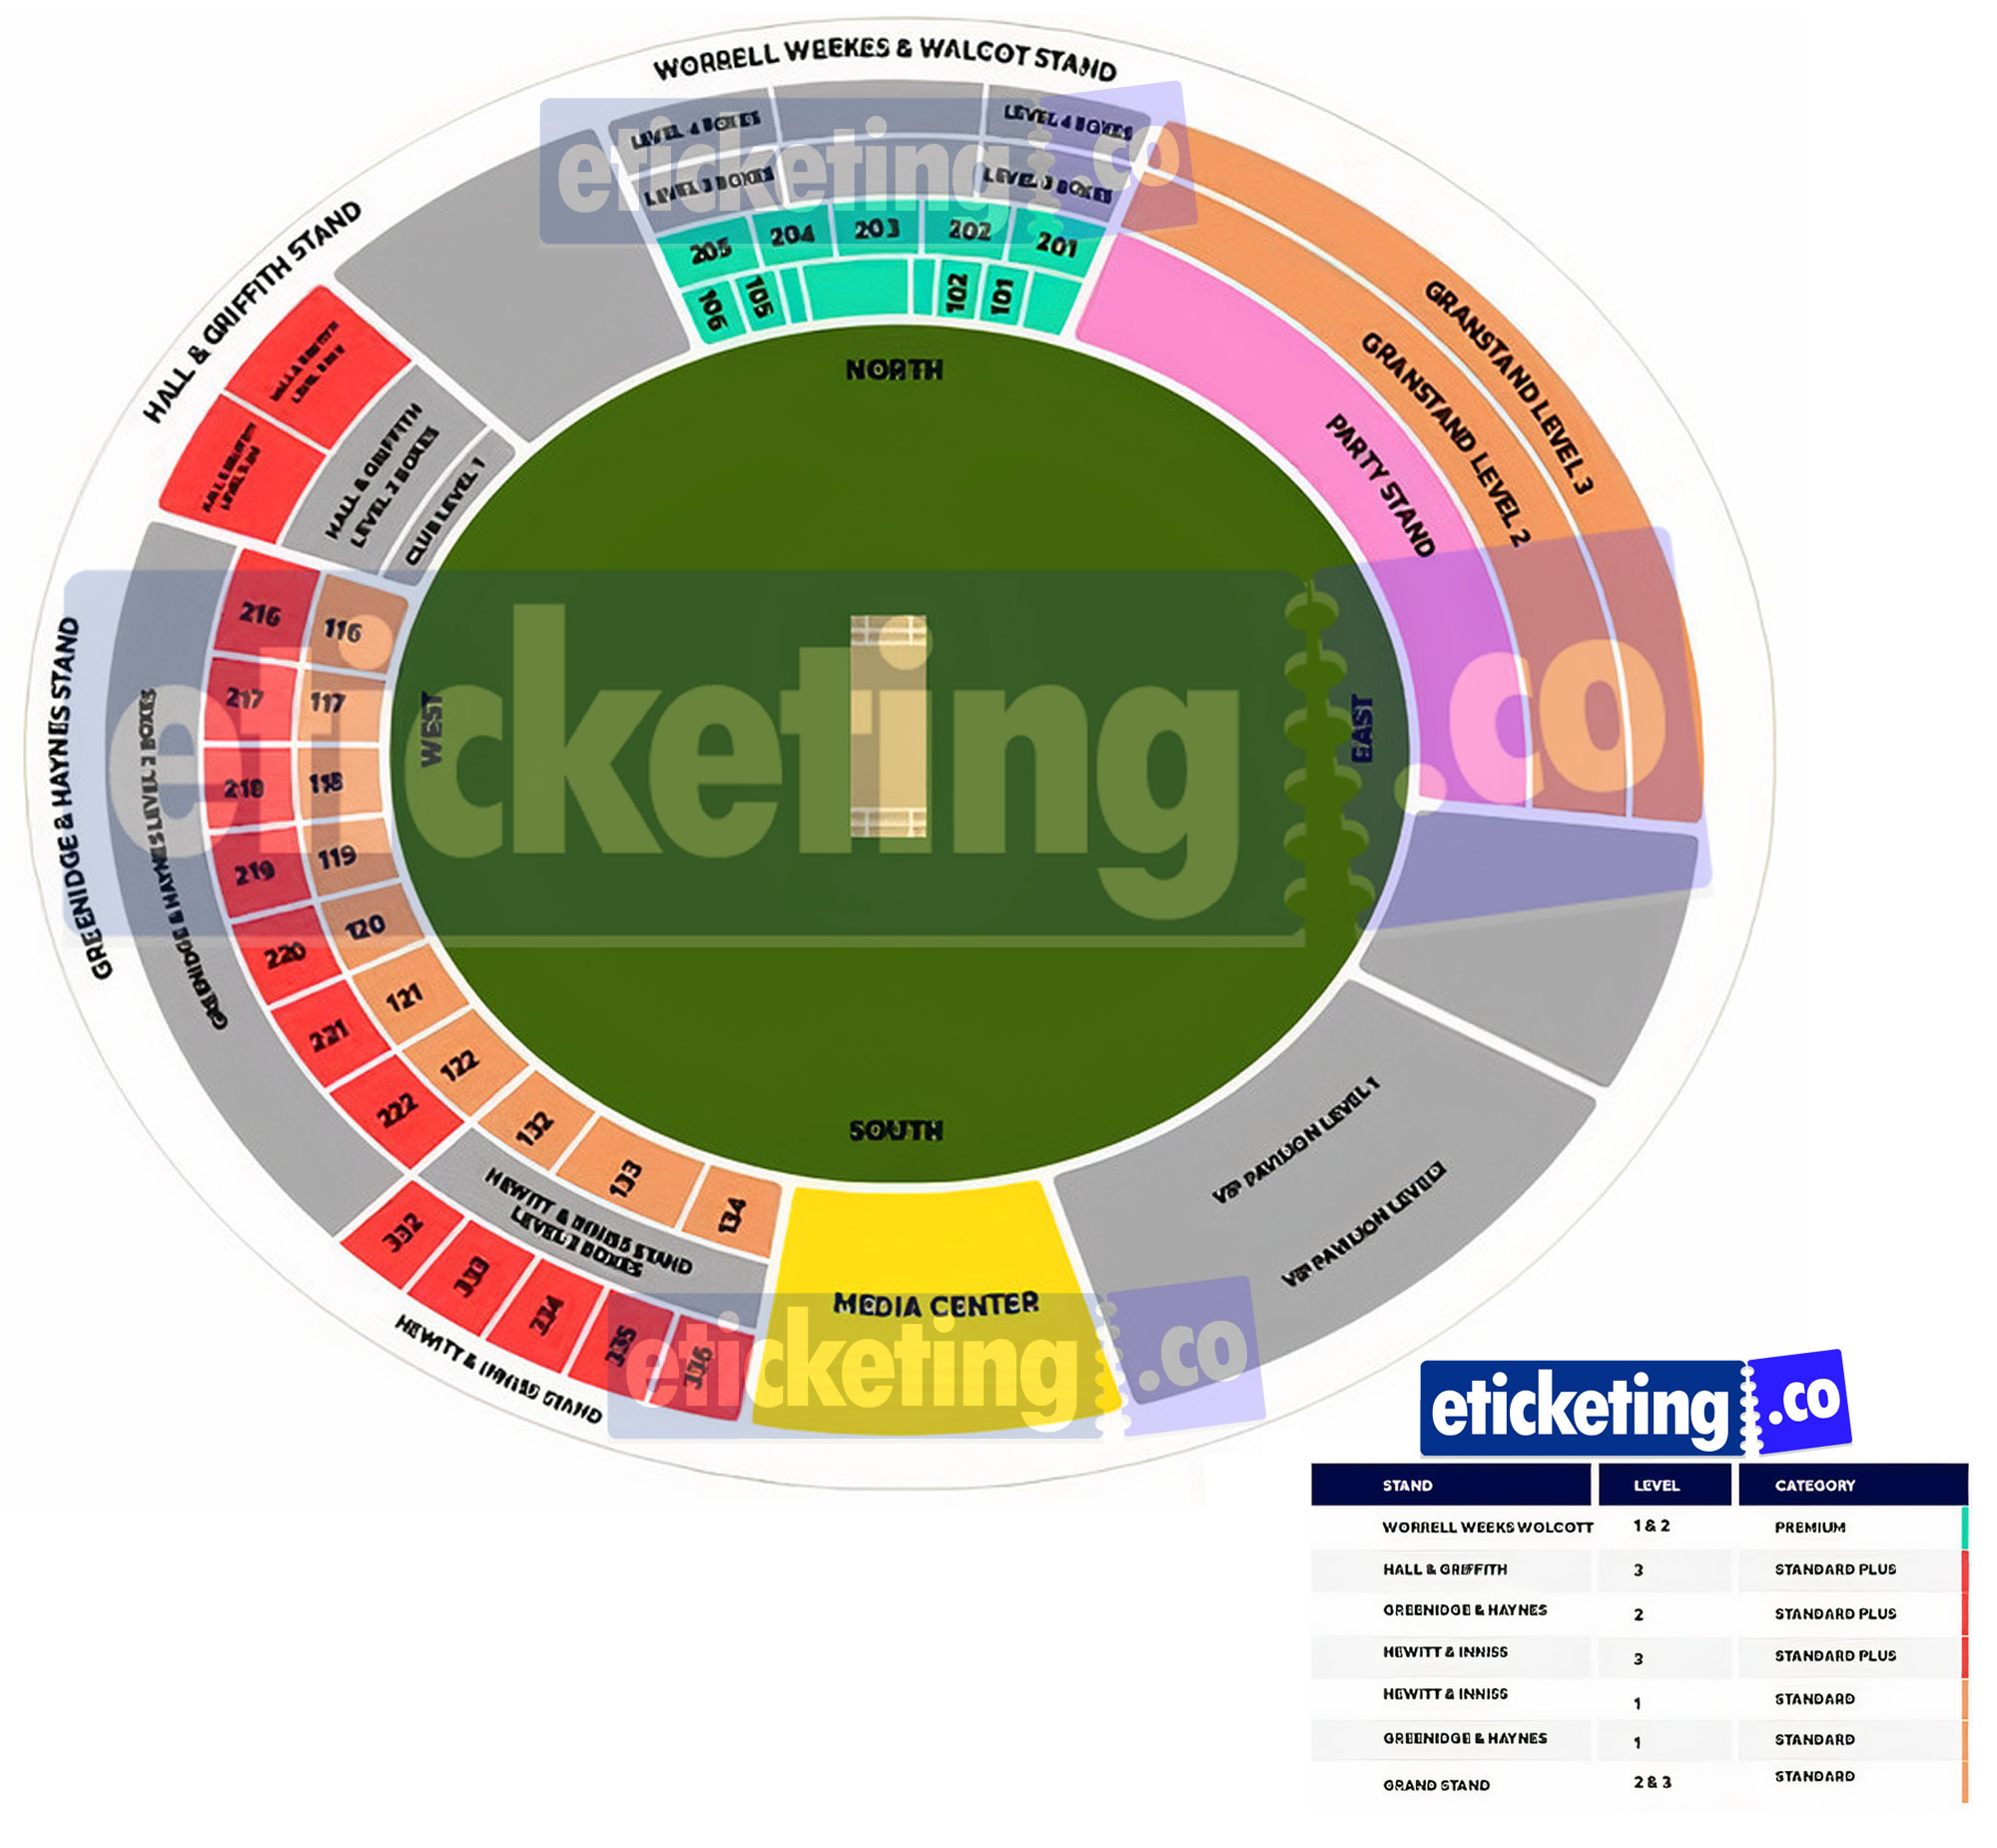 Kensington Oval T20 World Cup Final Venue Seating Plan